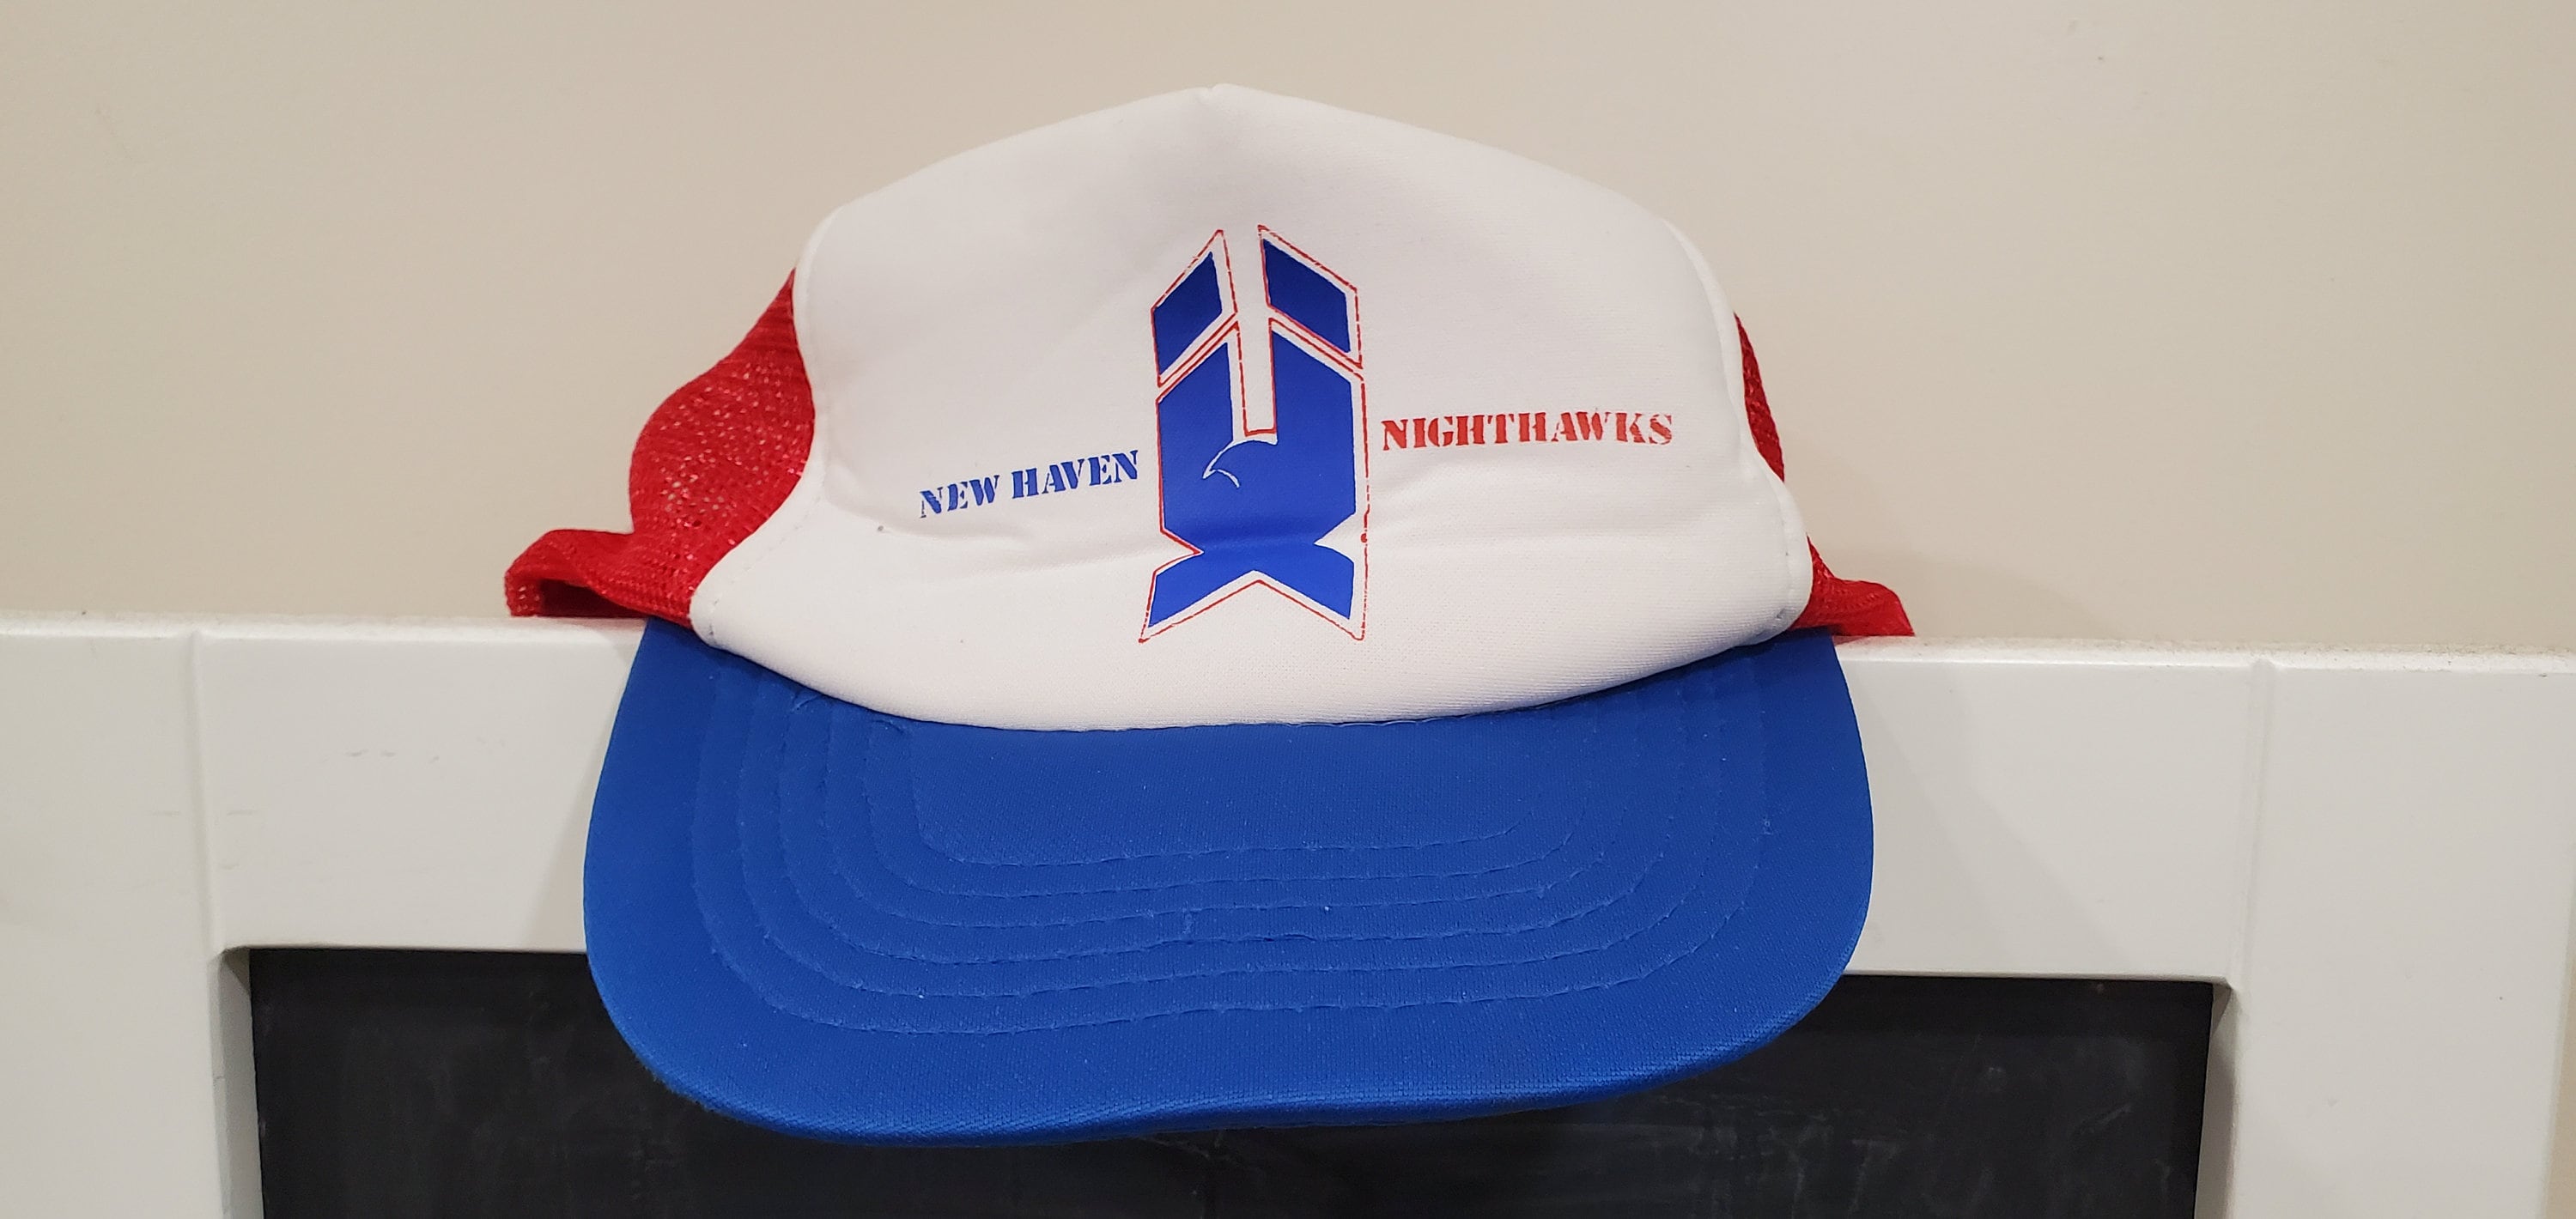 CLEARANCE New Haven Nighthawks Blue Jersey (#79 NIGHTHAWKS) 